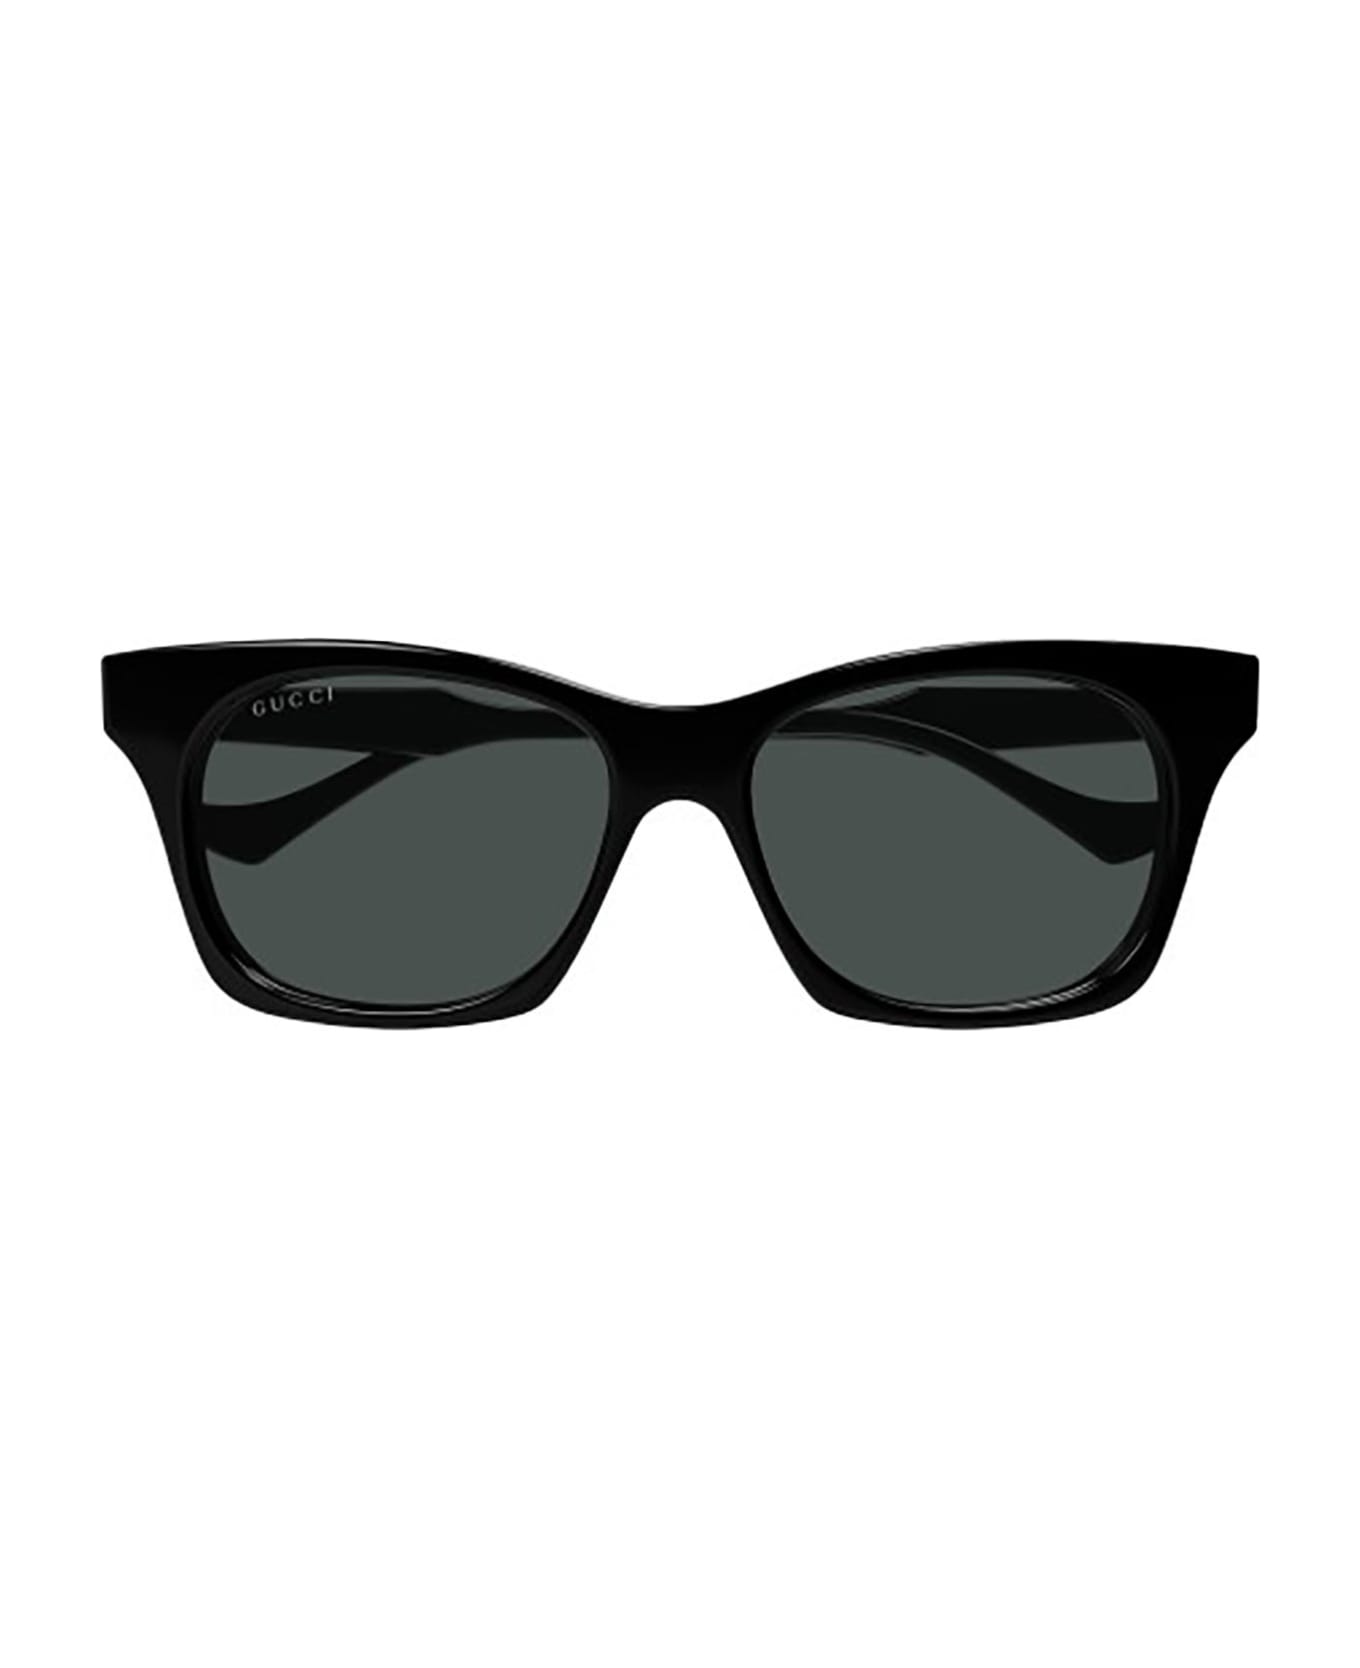 Gucci Eyewear GG1299S Sunglasses - Black Black Grey サングラス